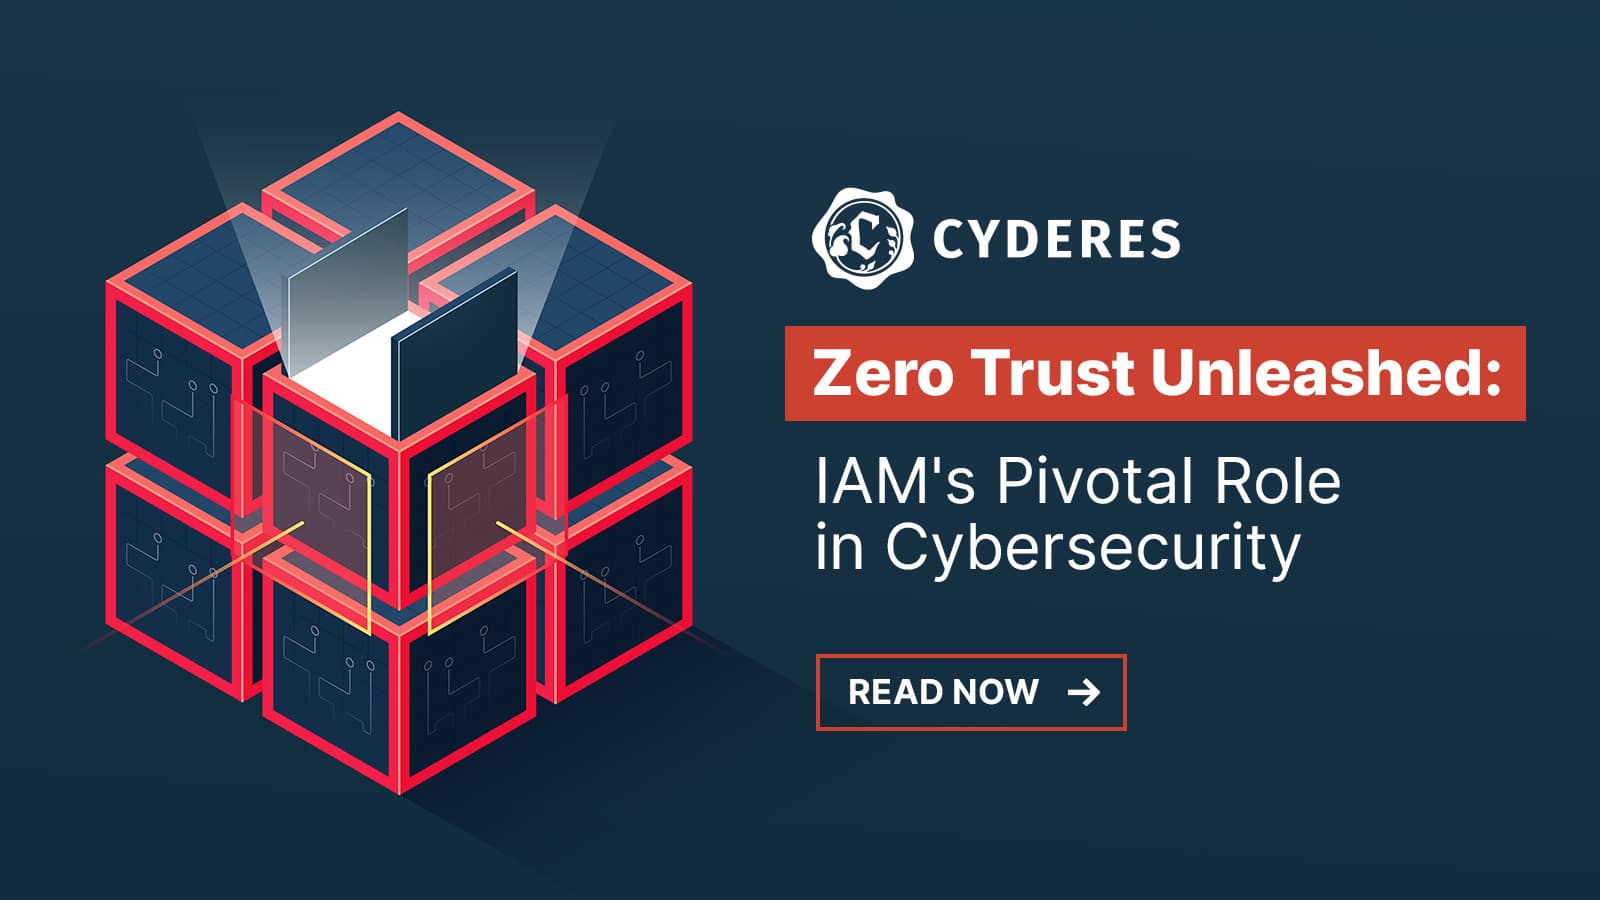 Zero Trust Unleashed: IAM’s Pivotal Role in Cybersecurity